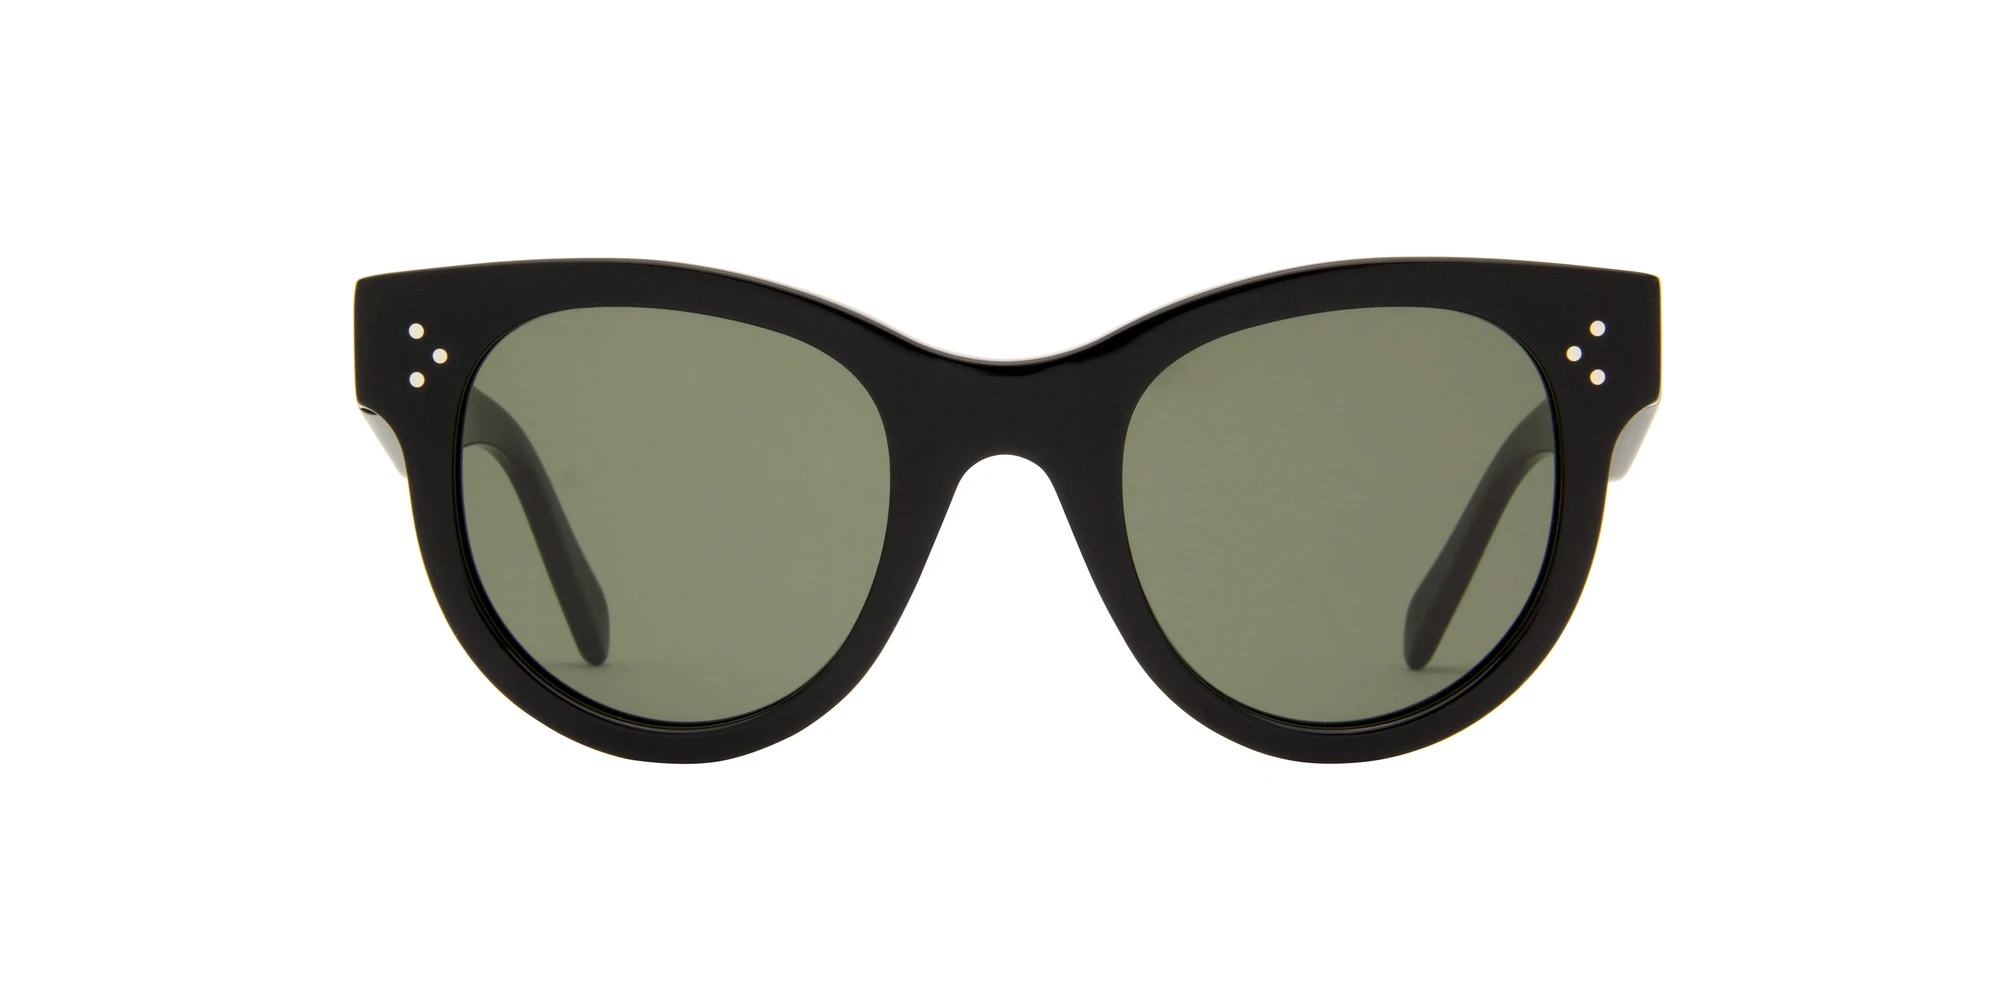 CL4003IN Shiny Black/Green Oval Women Sunglasses - 48mm